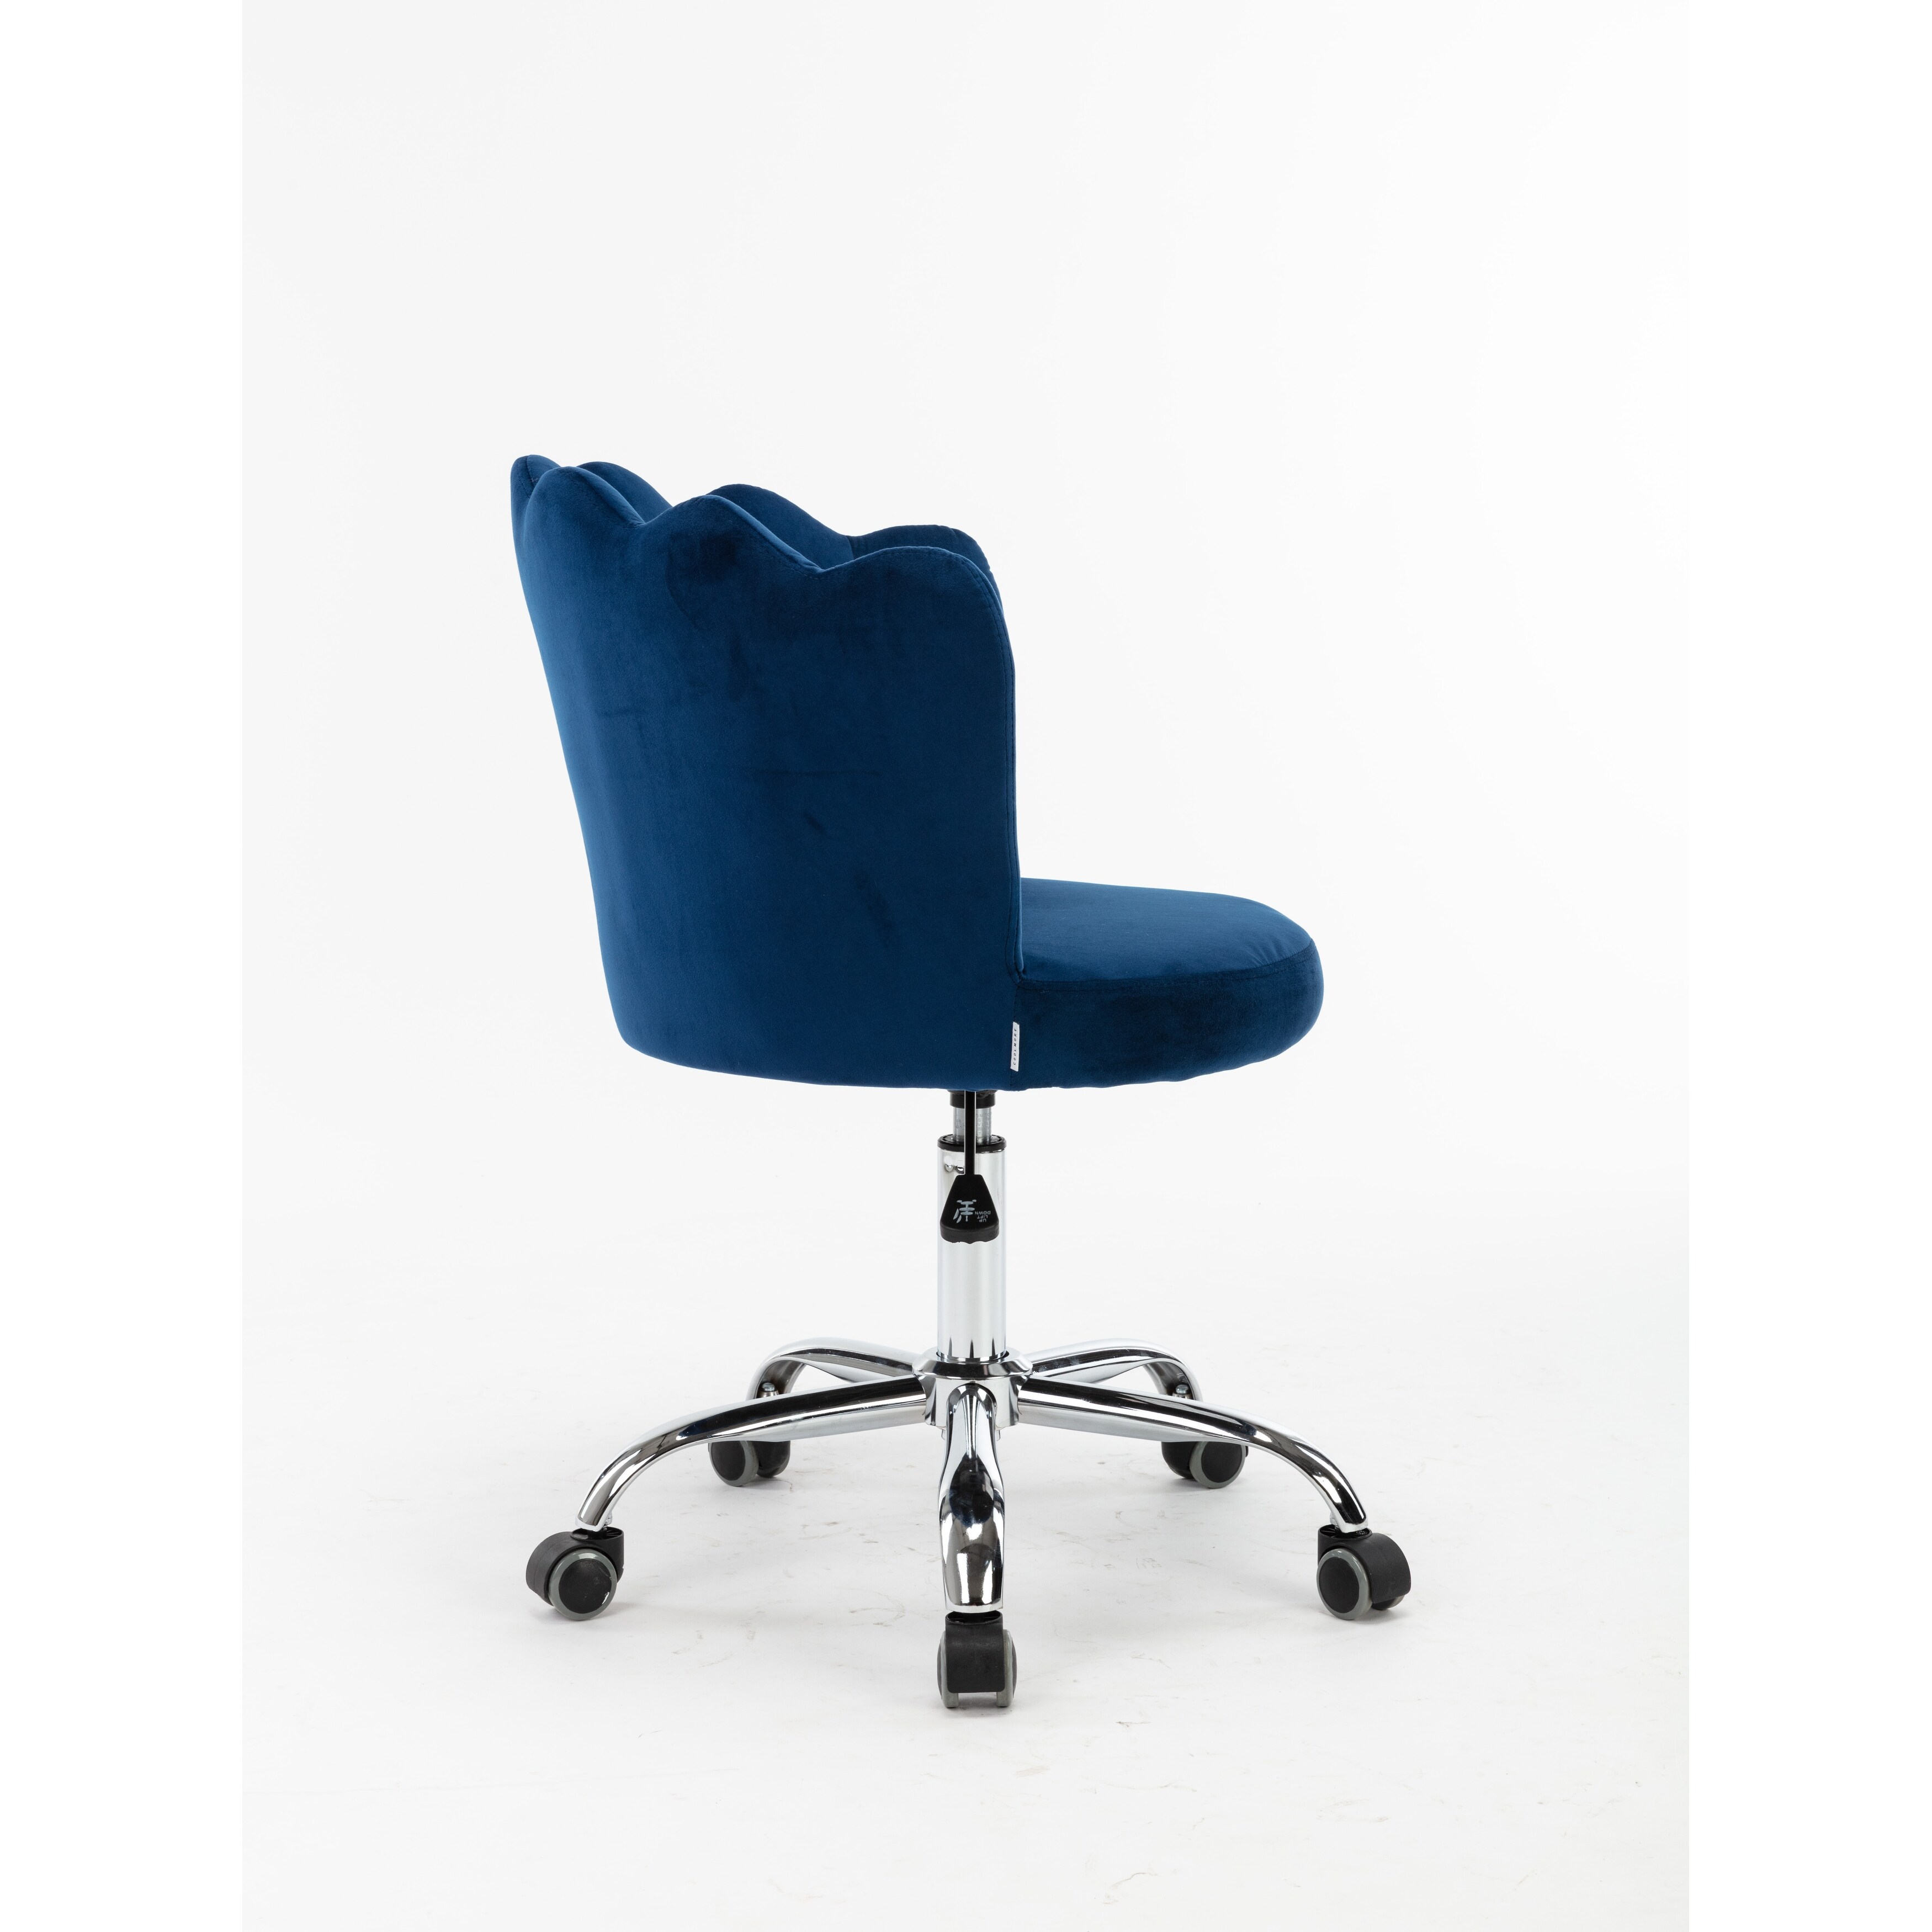 Chaise Bureau Roulante design - INCASSO SWIVEL ARMCHAIR WITH CASTER